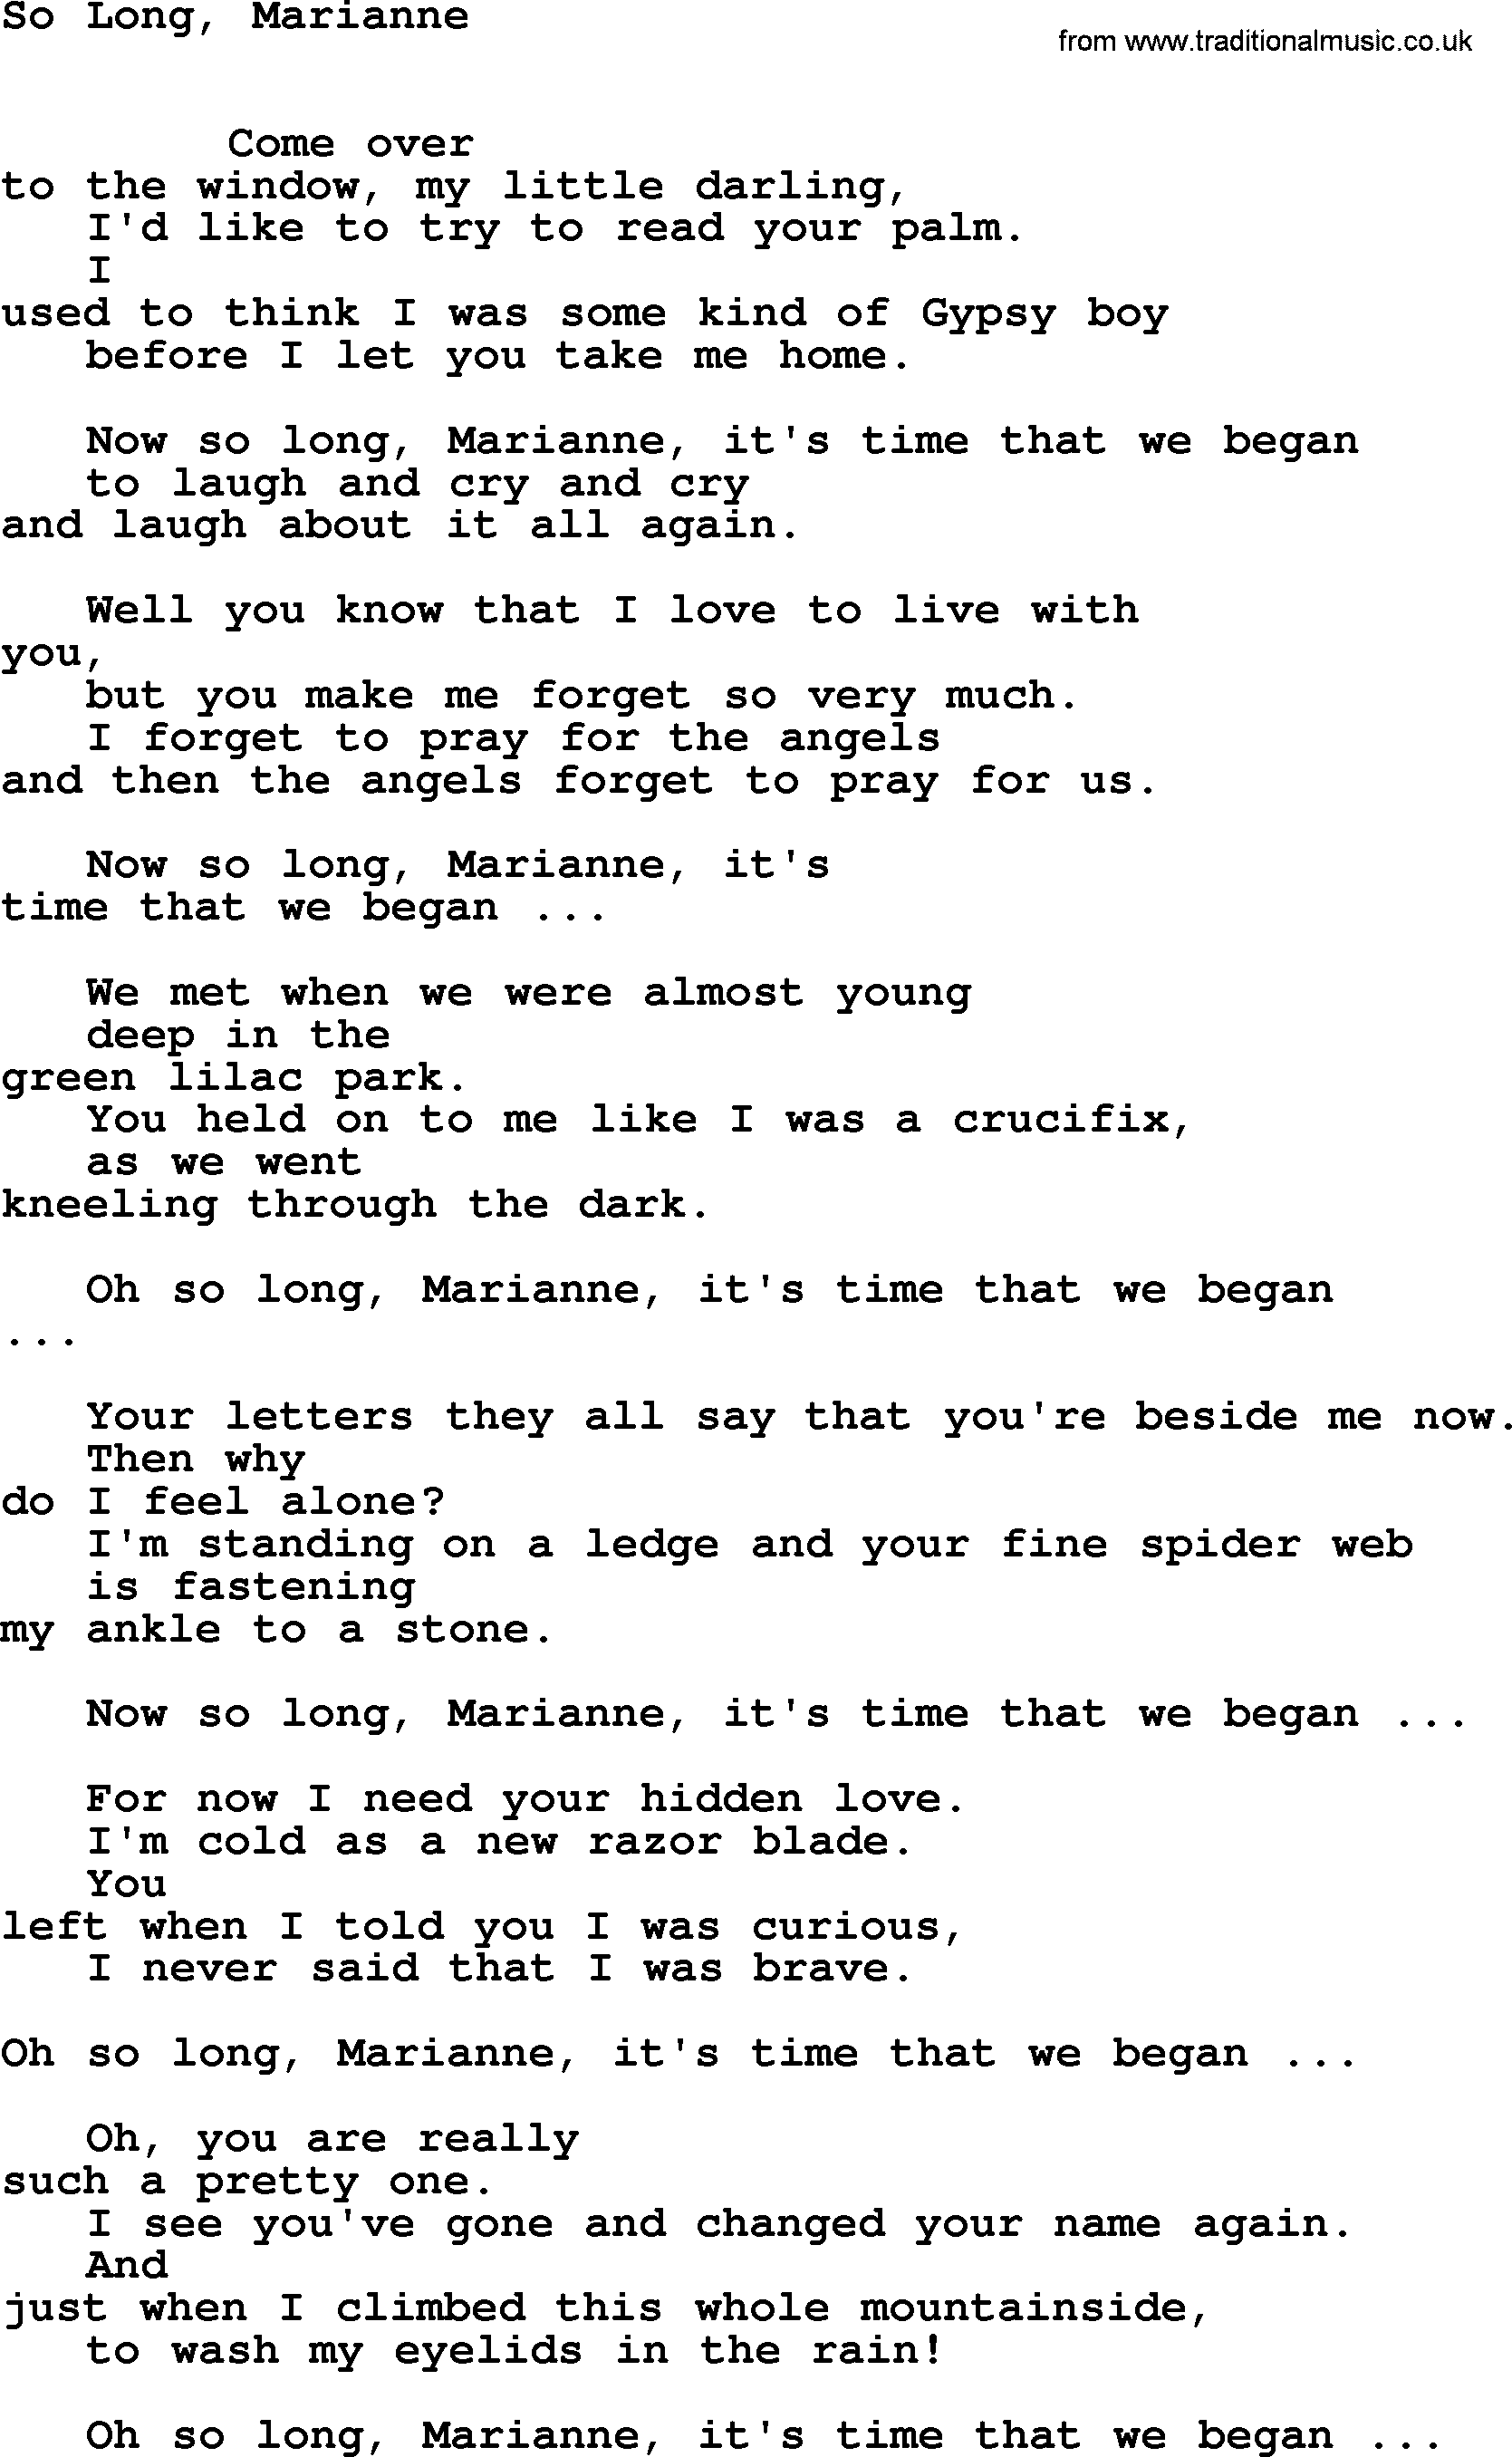 Leonard Cohen song So Long Marianne-leonard-cohen.txt lyrics